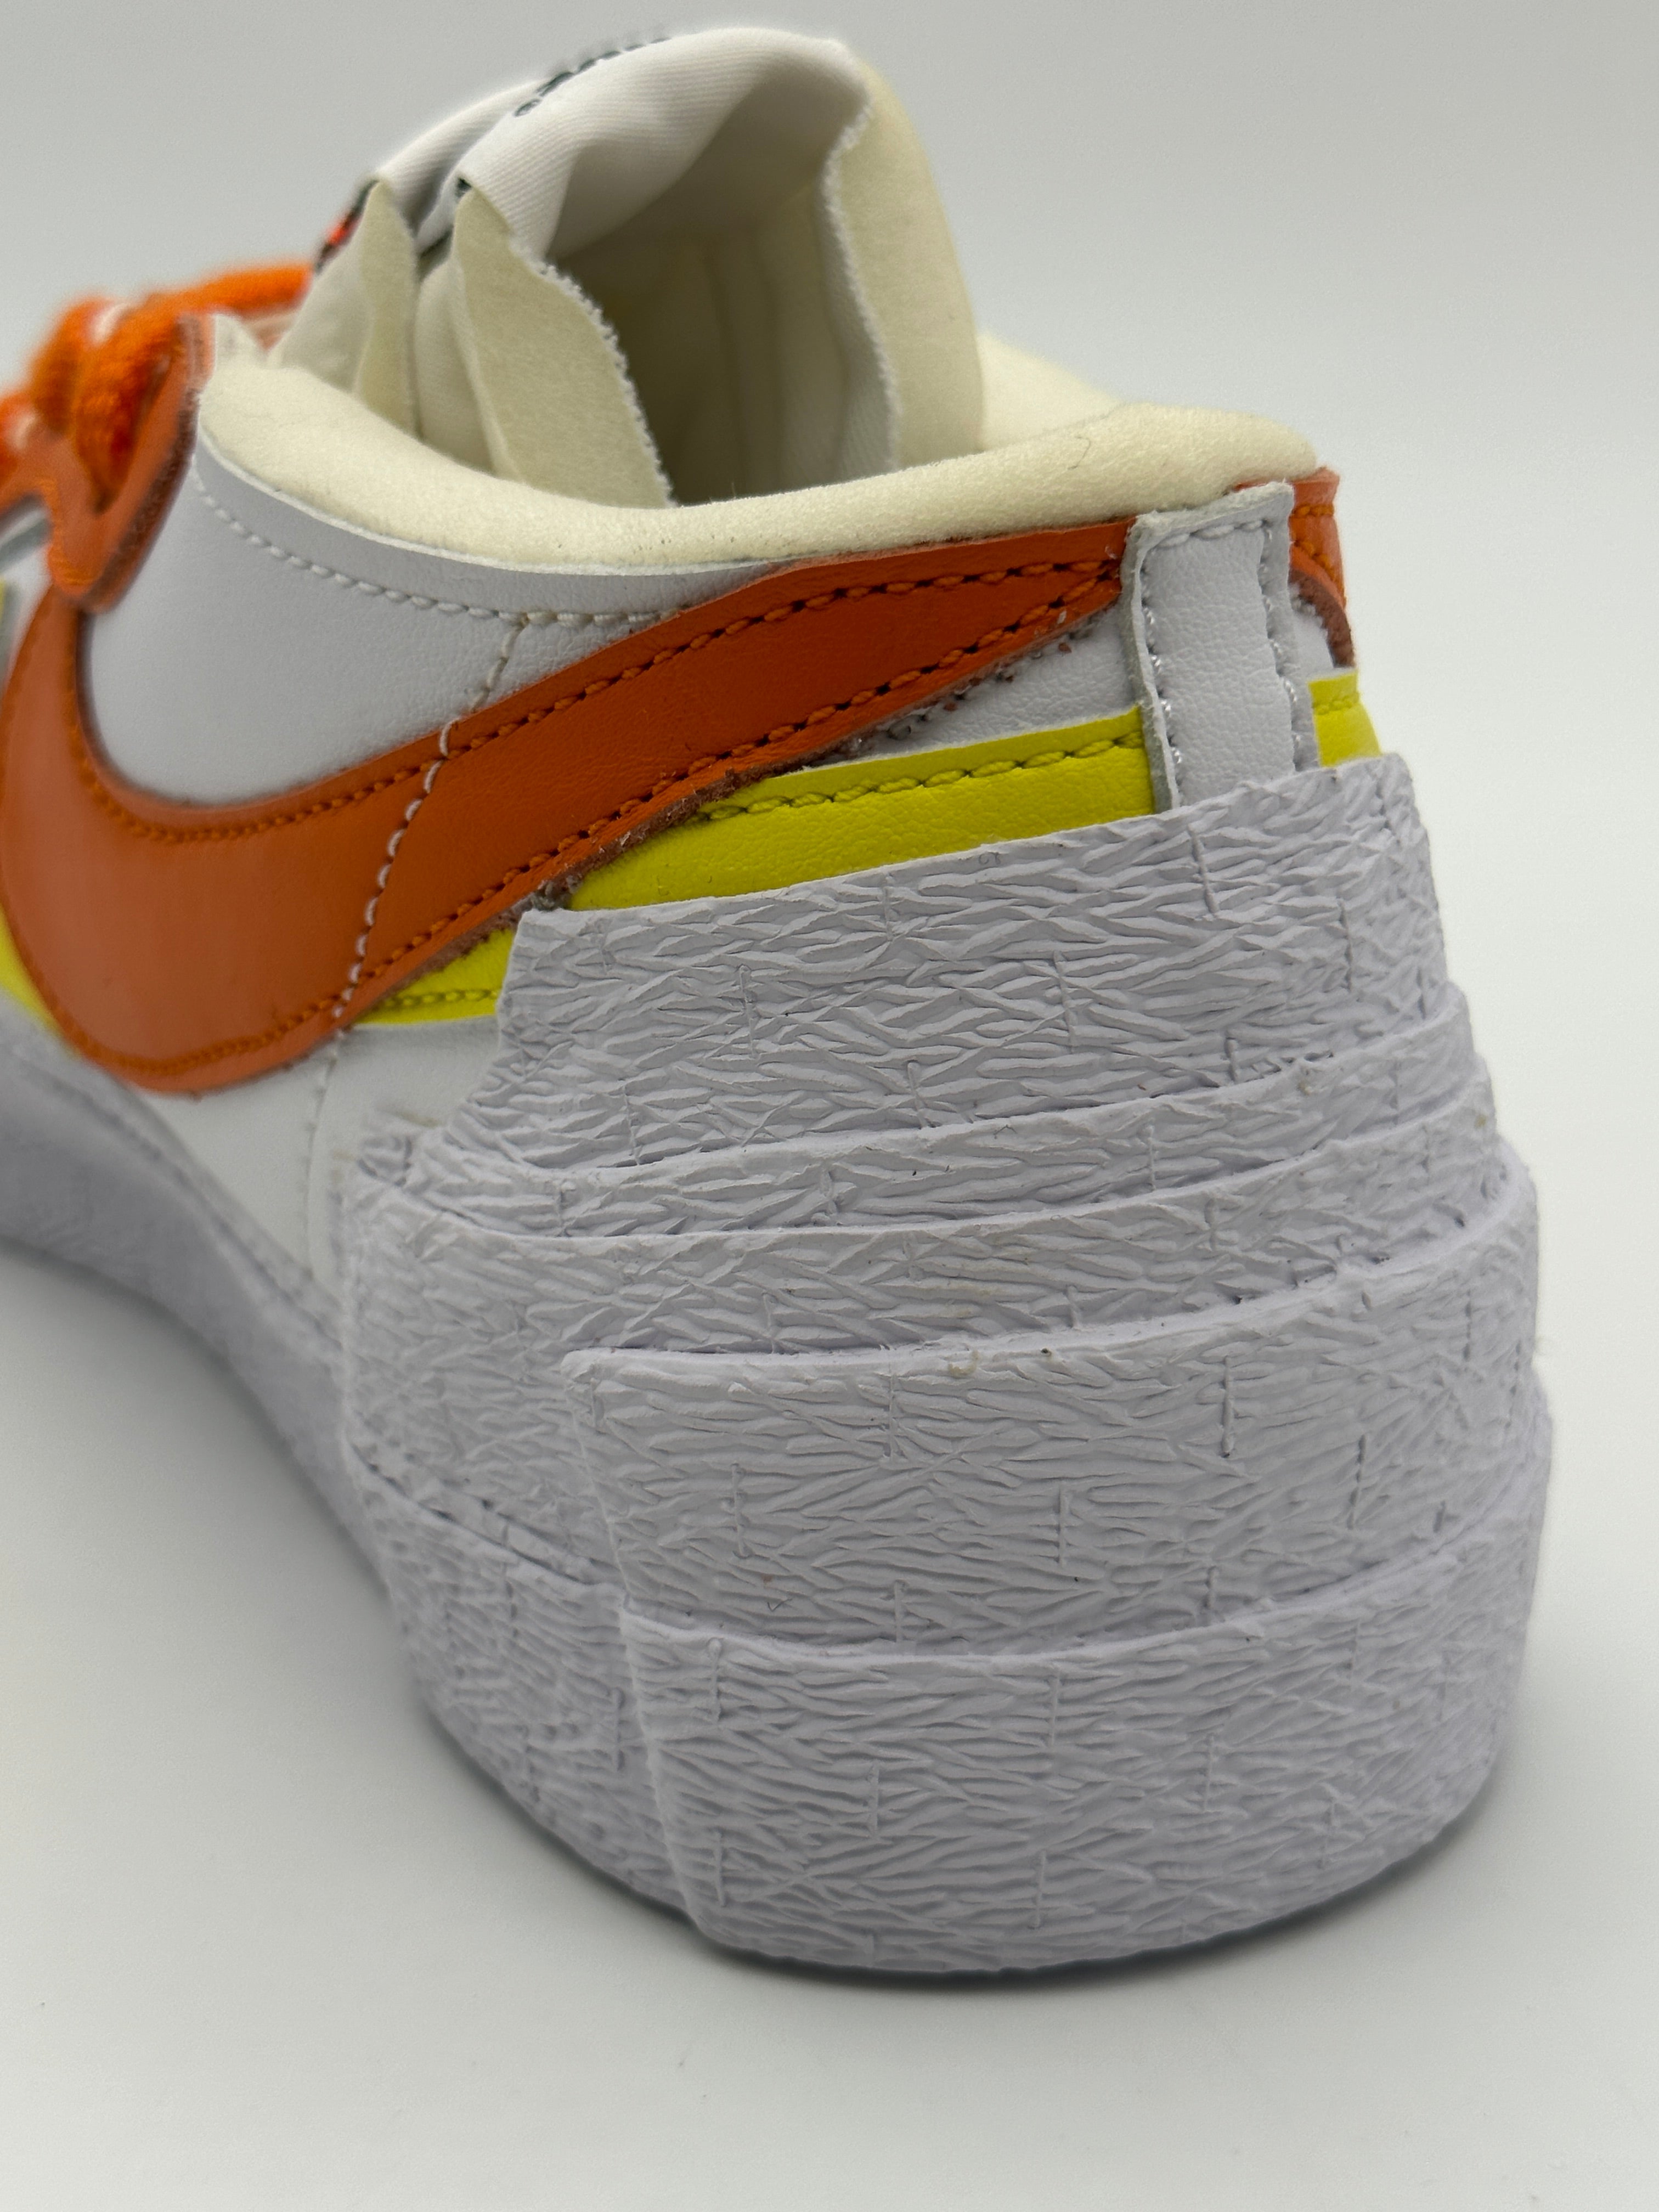 Blazer Low "Classic Orange" Sneakers